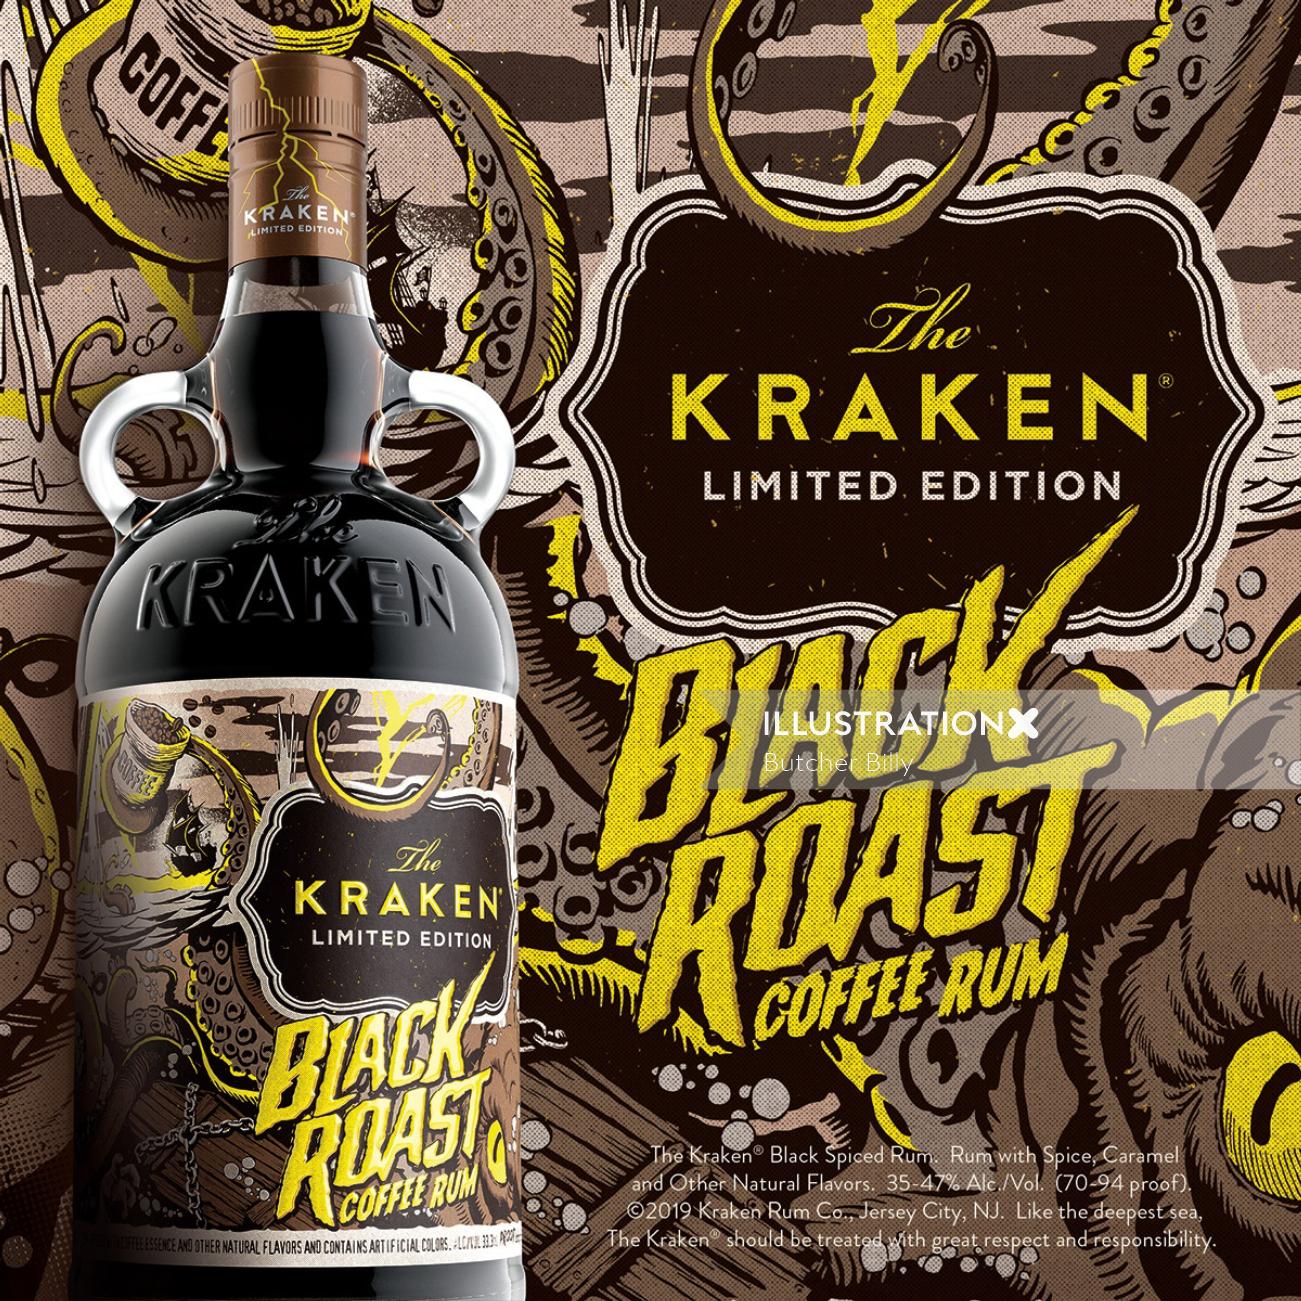 Diseño de etiqueta para Black Roast Coffee Rum de Kraken